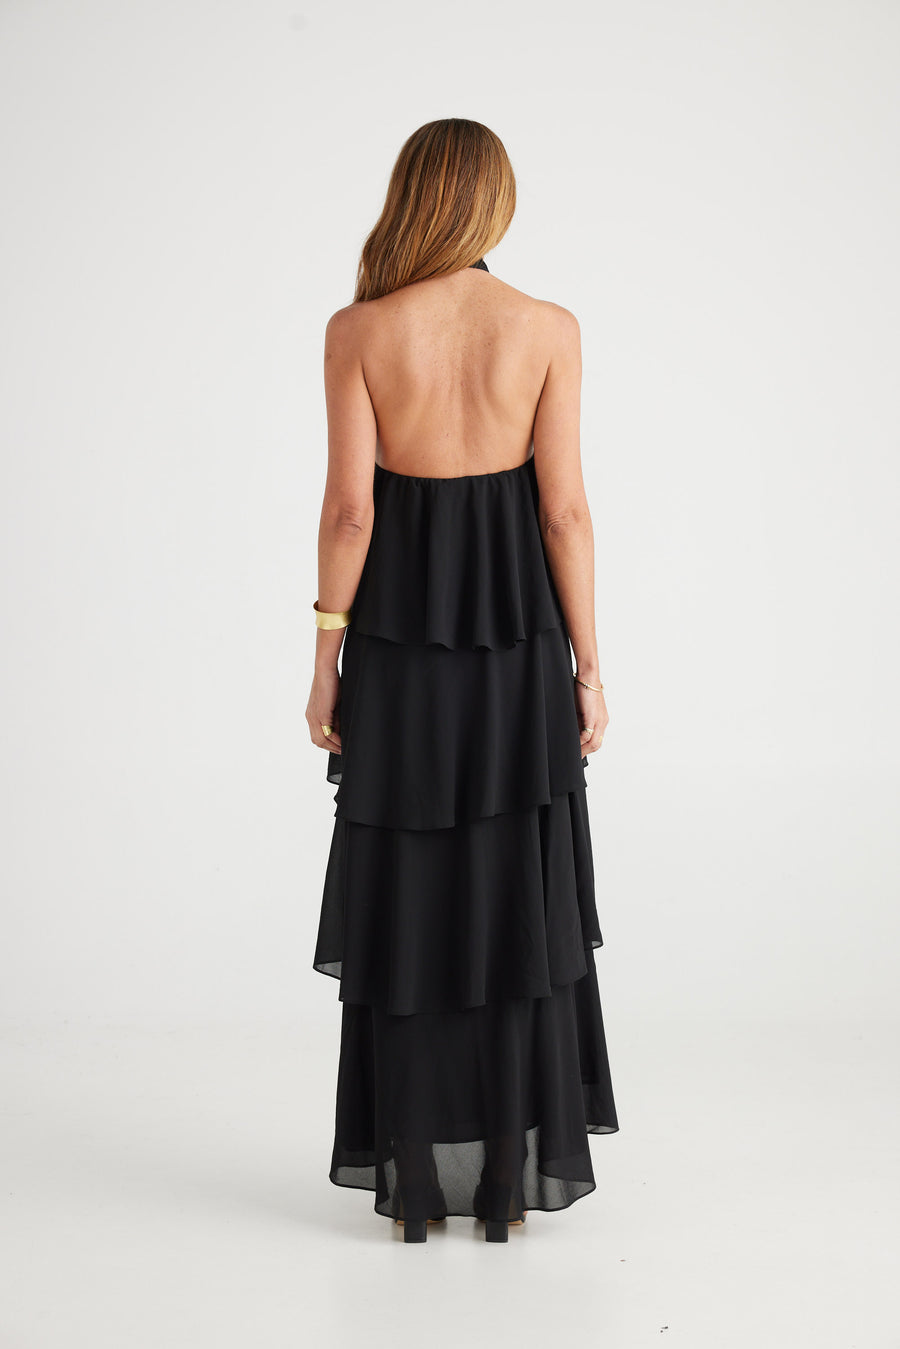 Eloise Dress - Black